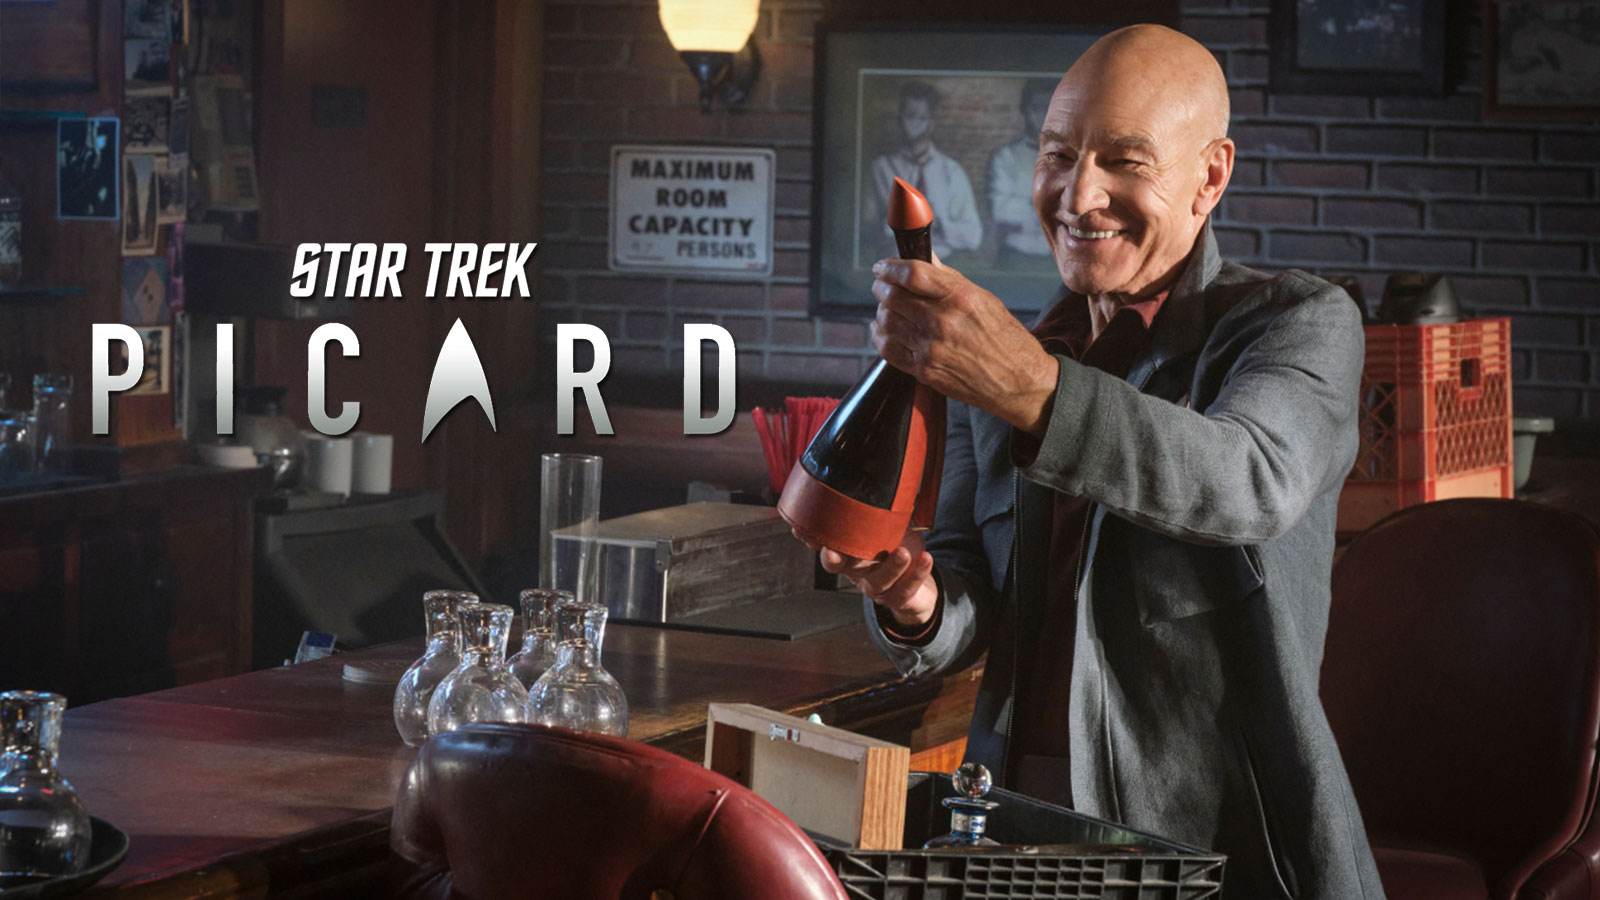 Star Trek: Picard Season 2 Episode 4 "Watcher" Review: Who Watches the Watchers?